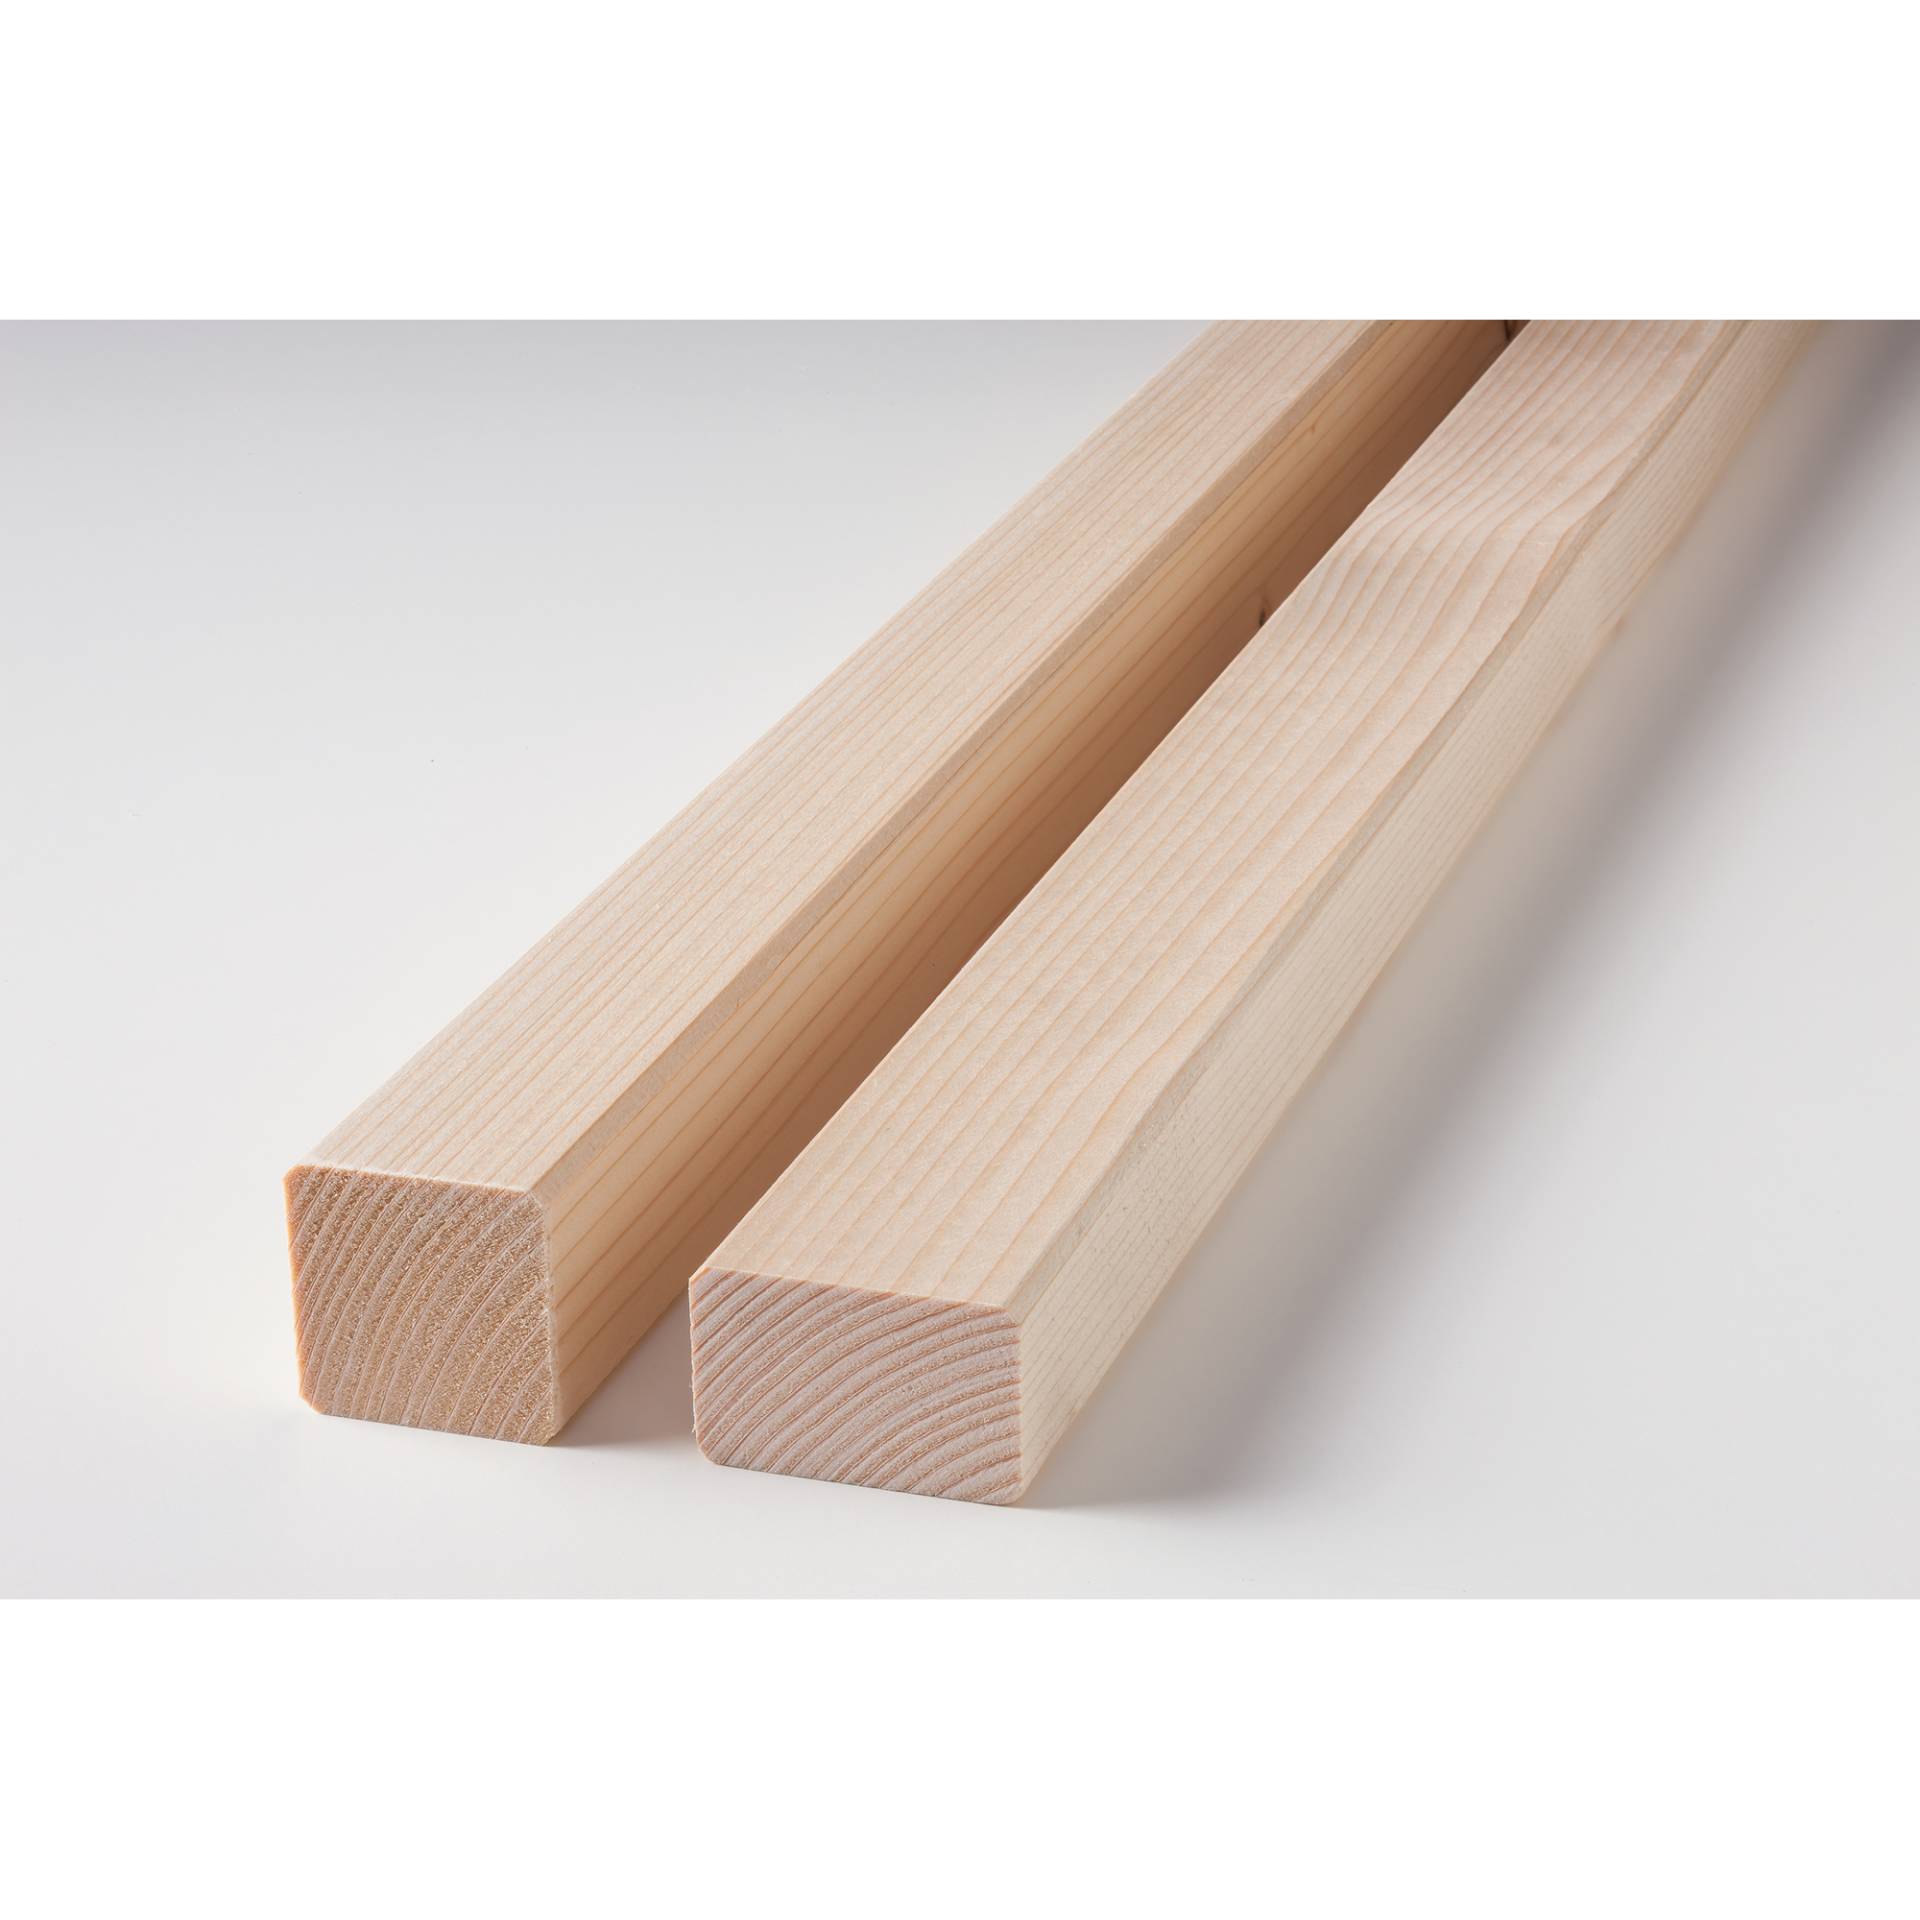 binderholz Latte gehobelt 2000 x 44 x 24 mm von binderholz